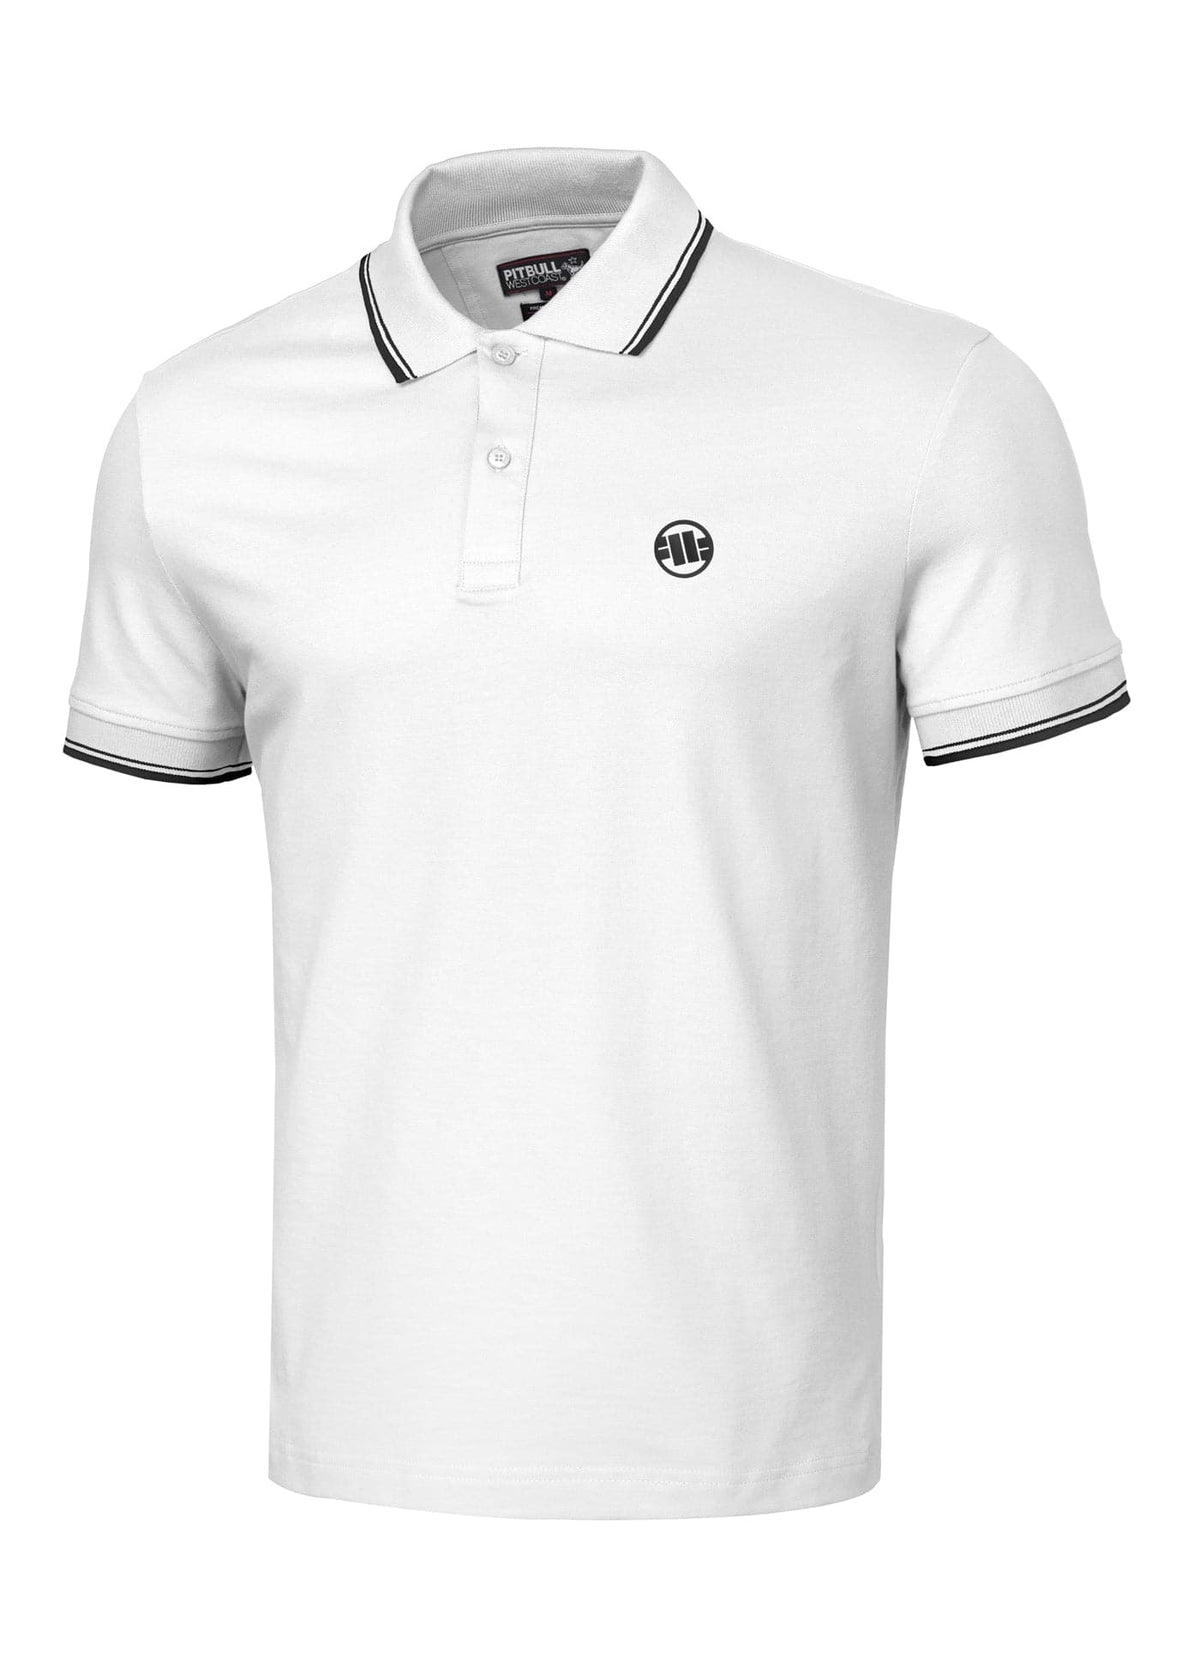 PIQUE STRIPES REGULAR White Polo T-shirt - Pitbullstore.eu